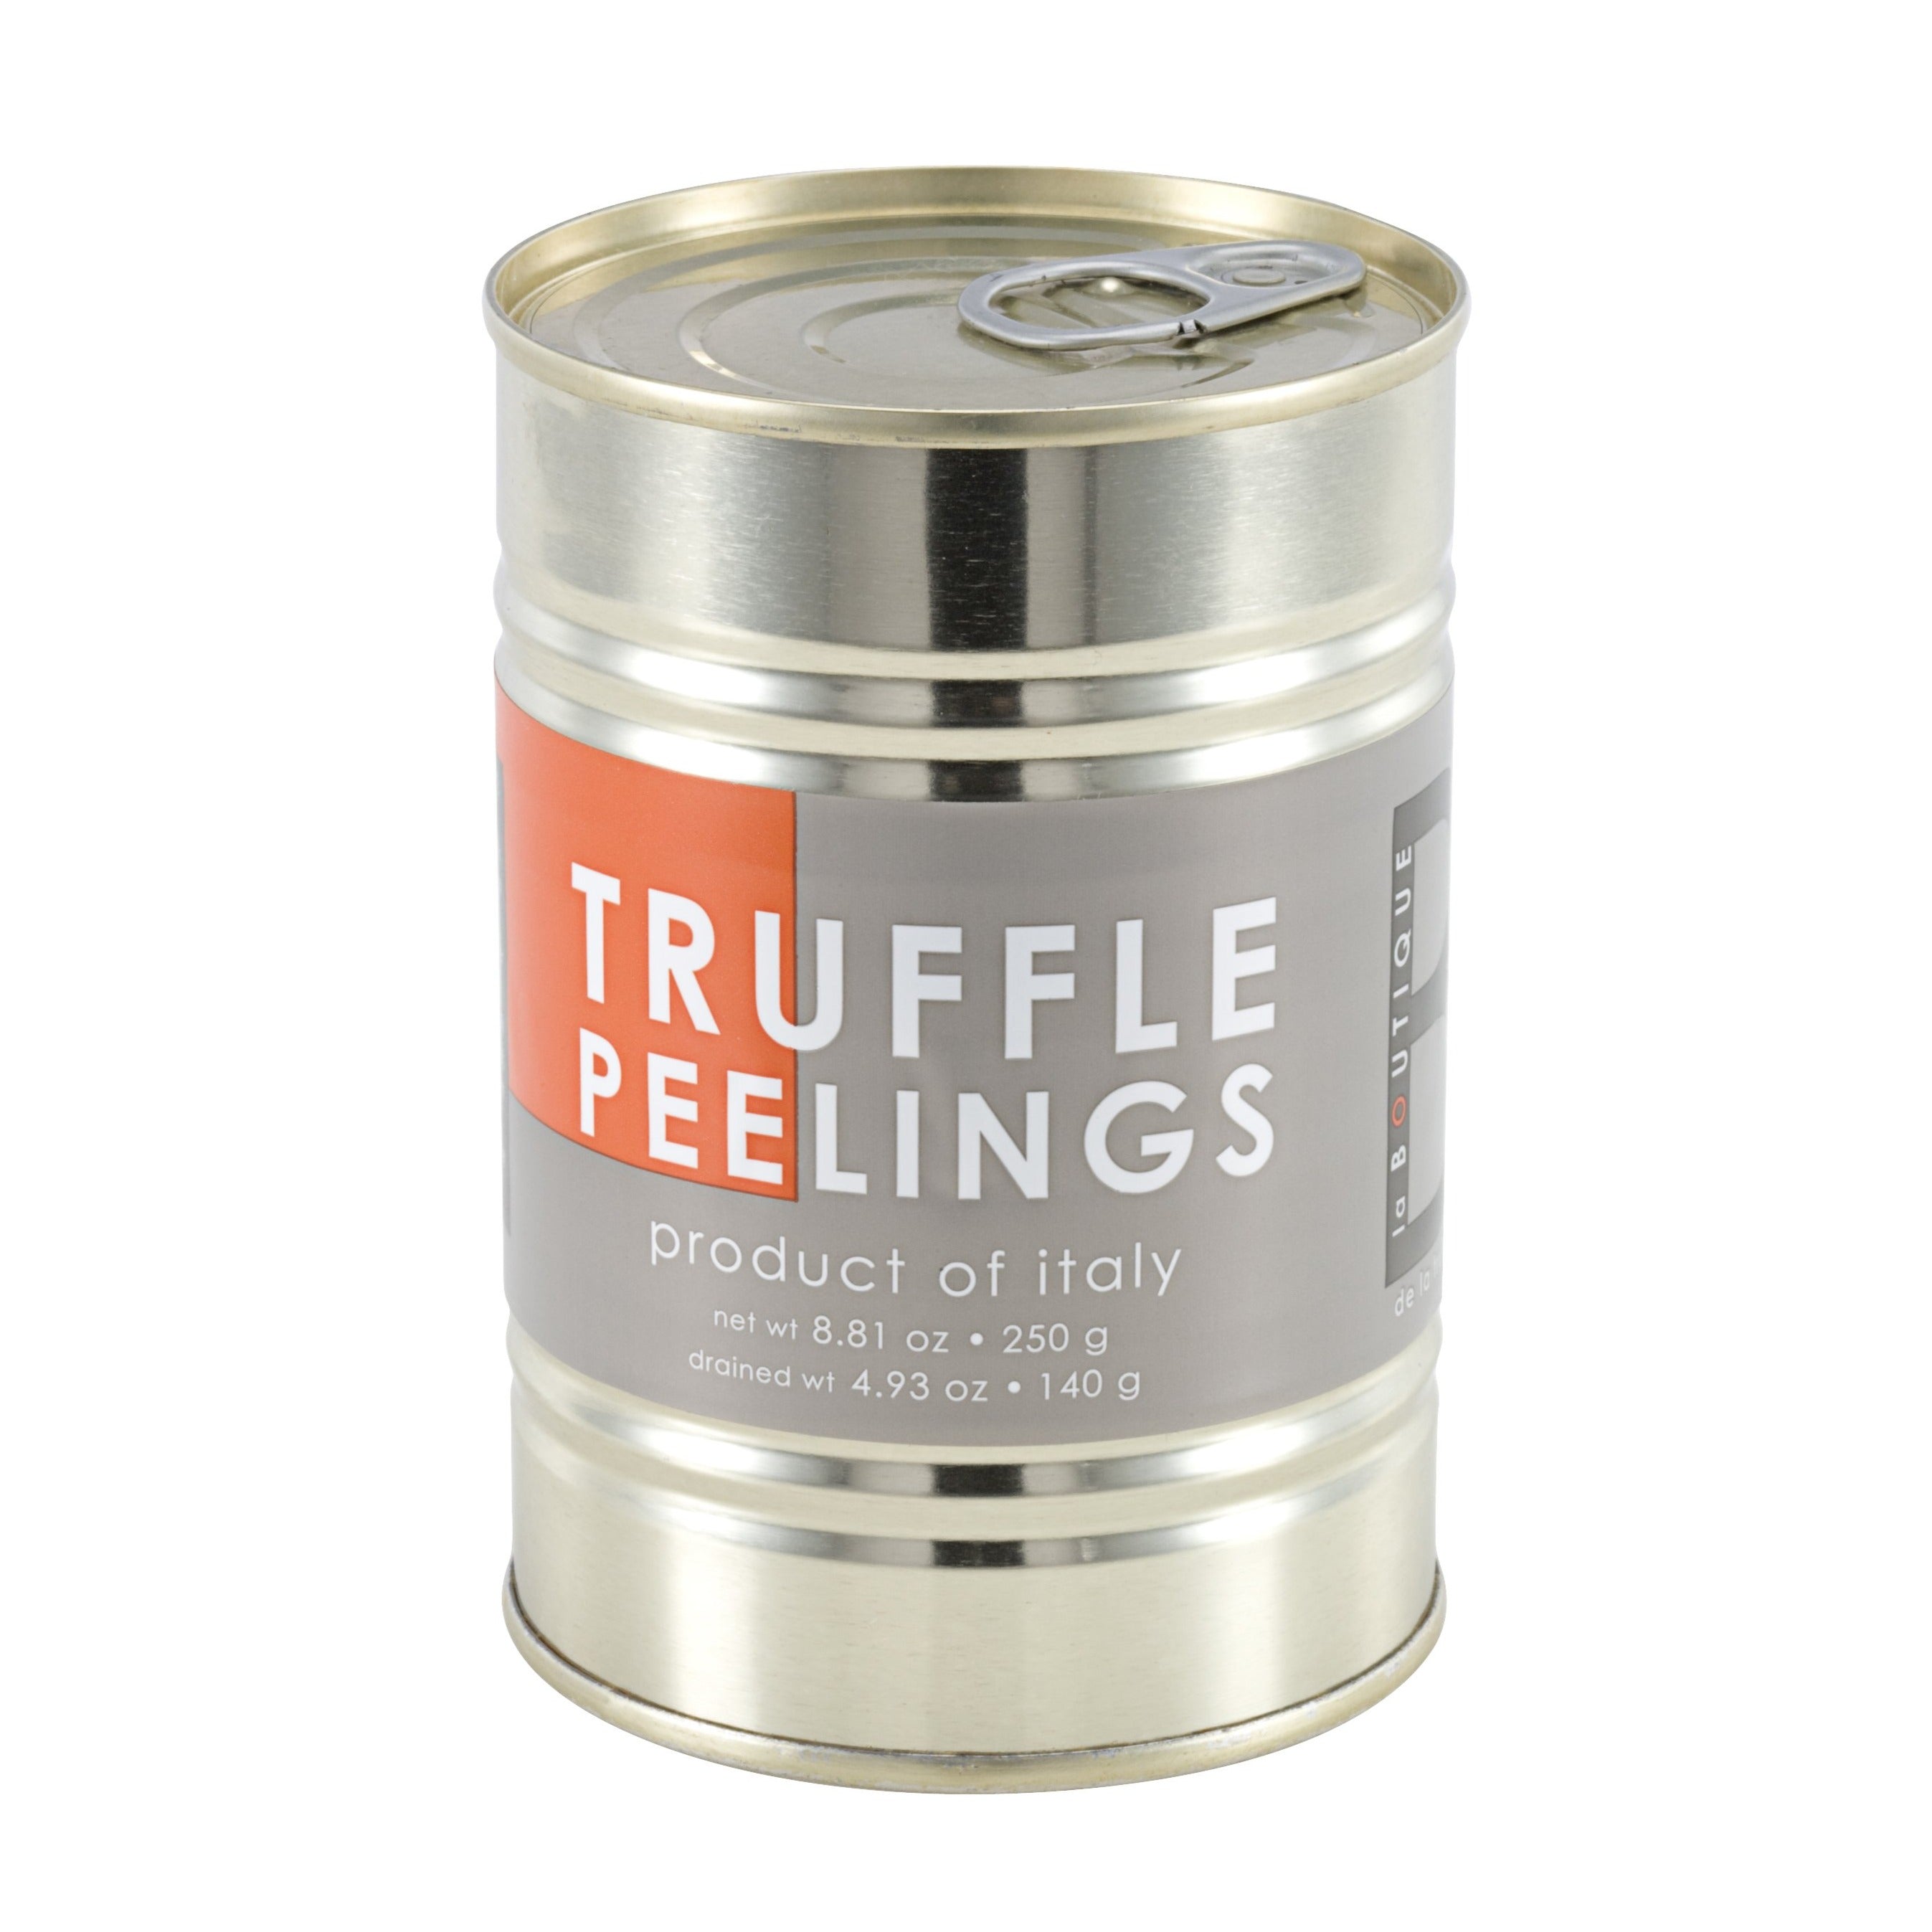 Truffle Peelings - 14.11 oz (400g)